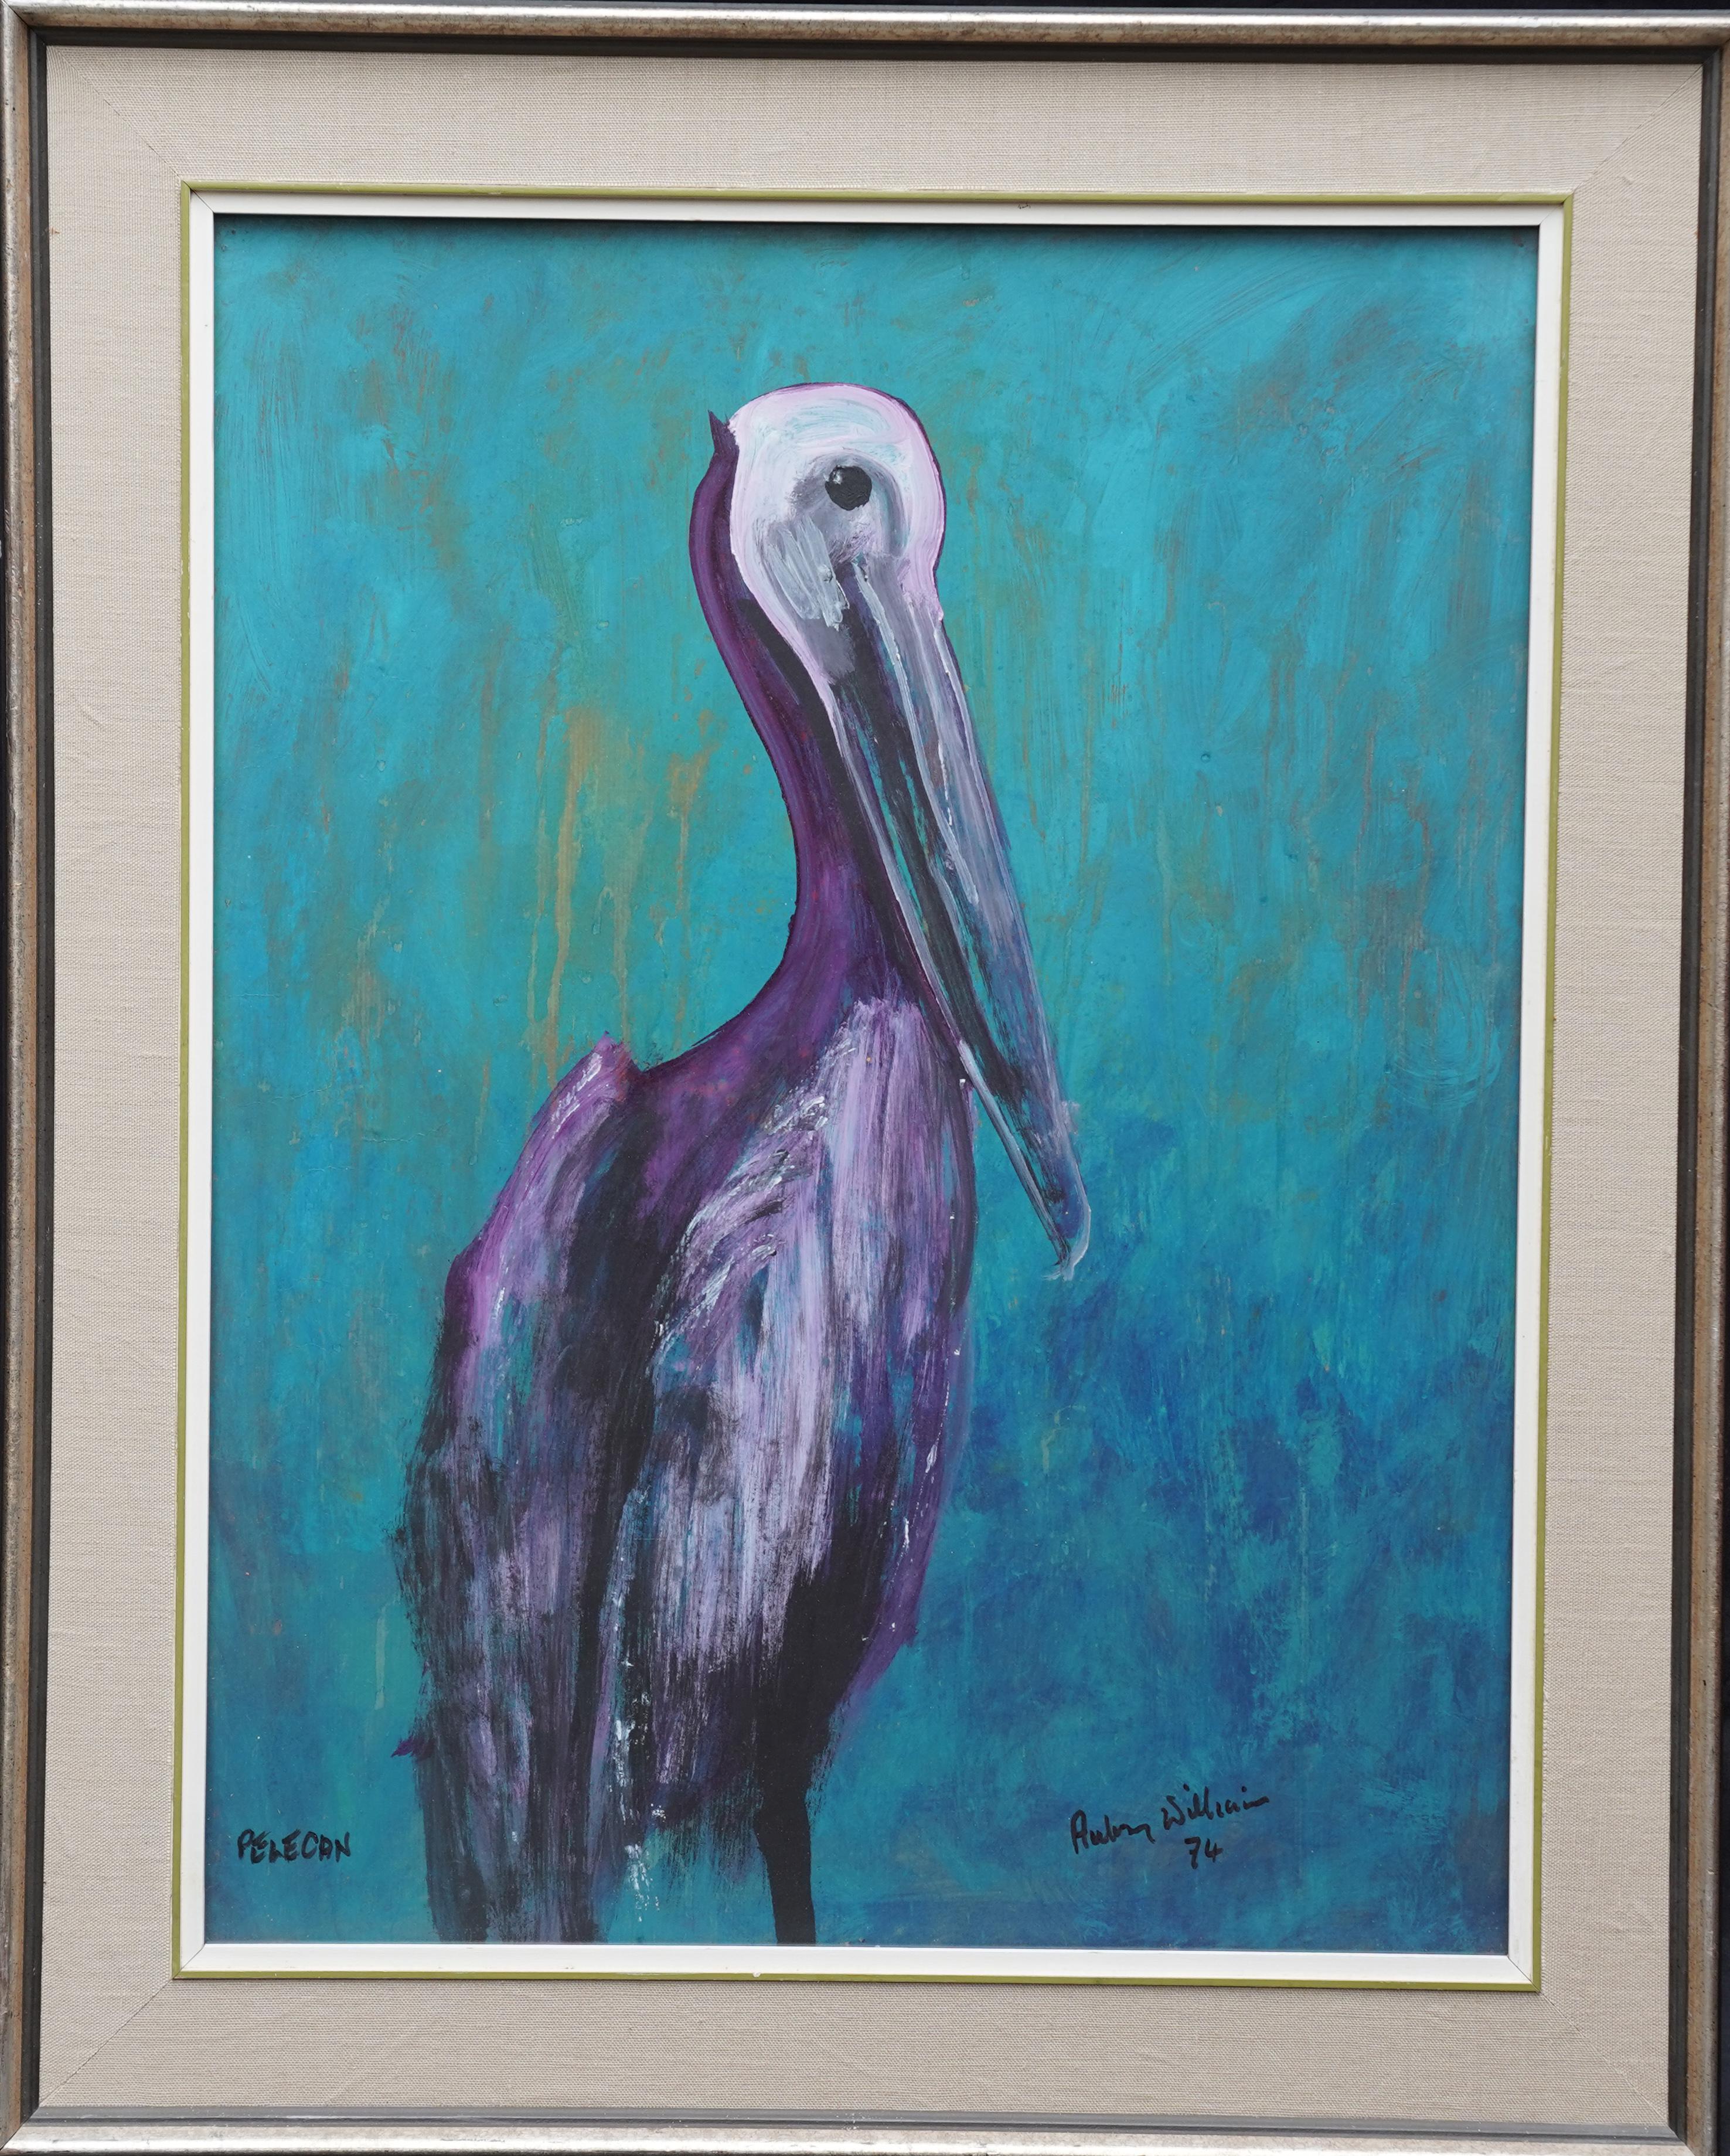 Aubrey Williams Animal Art - Pelican 1974 - Expressionist animal art watercolour/gouache bird painting